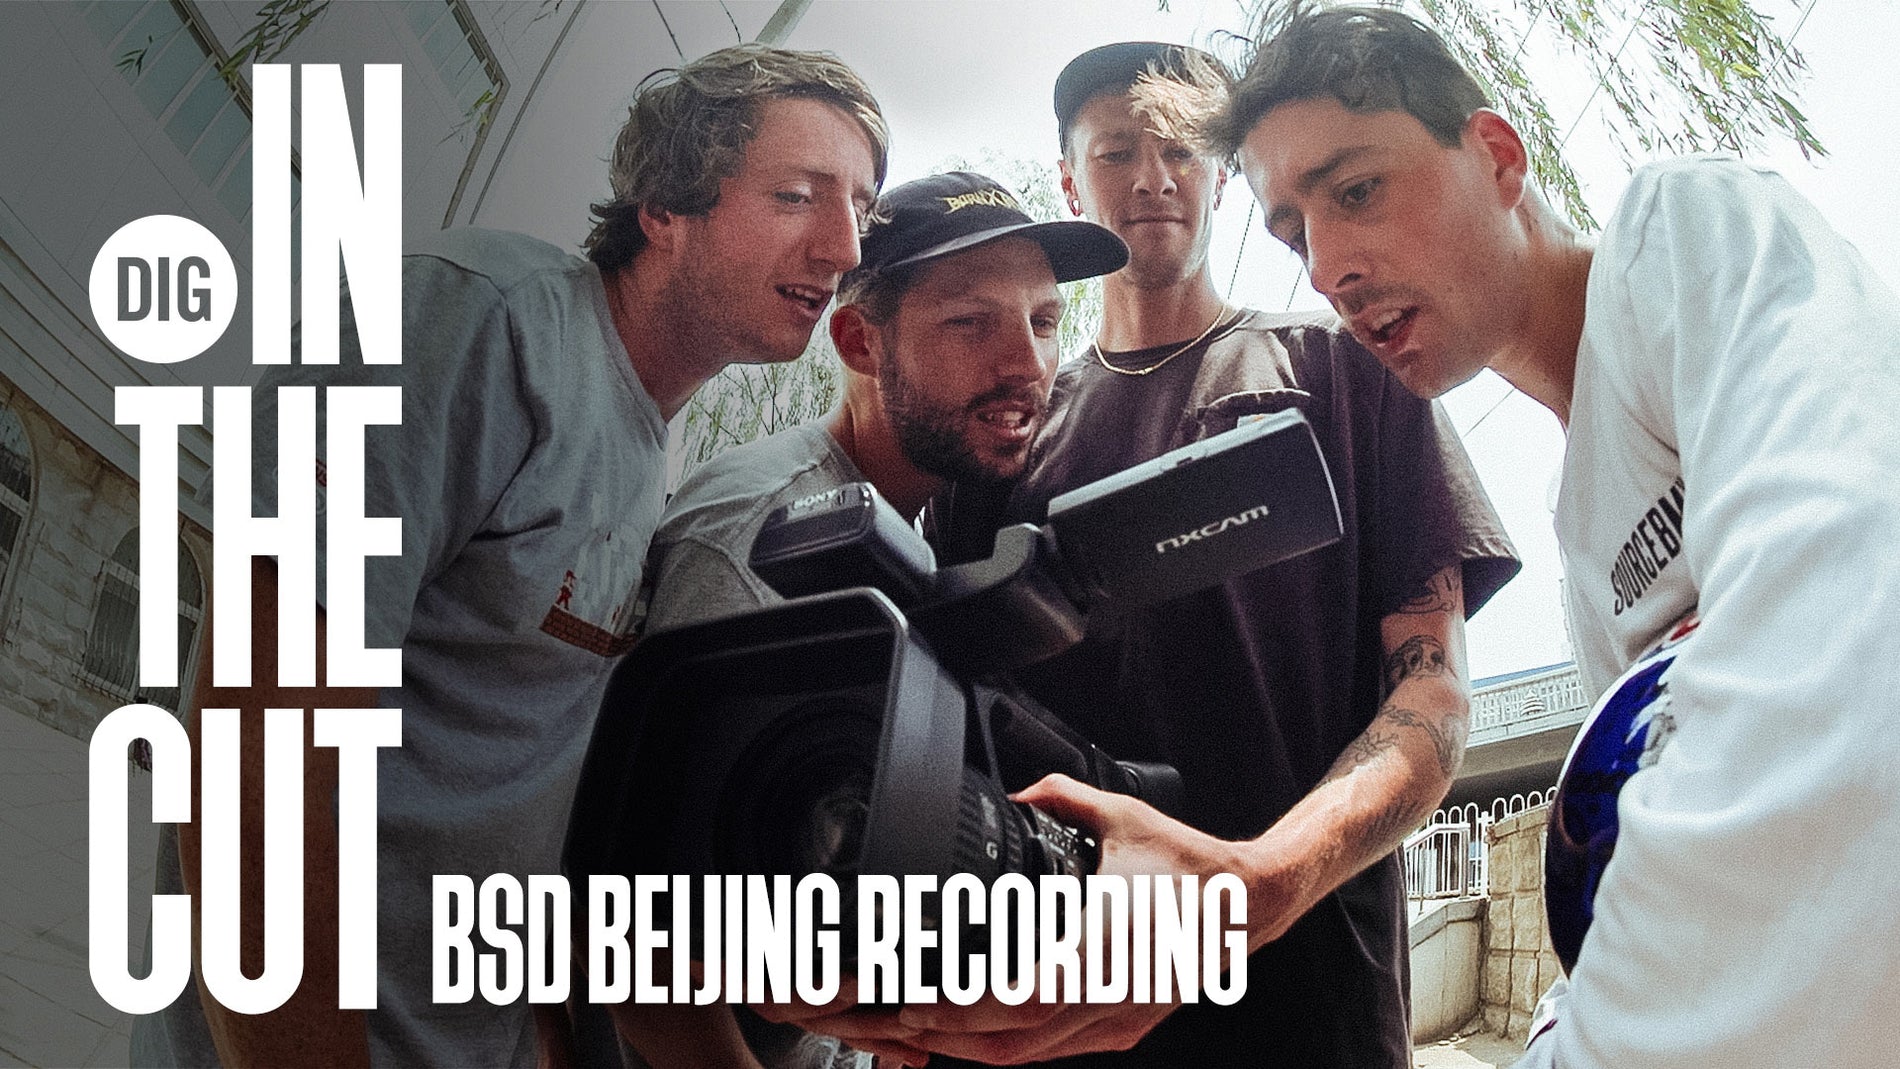 'In The Cut' - BSD Beijing Recording